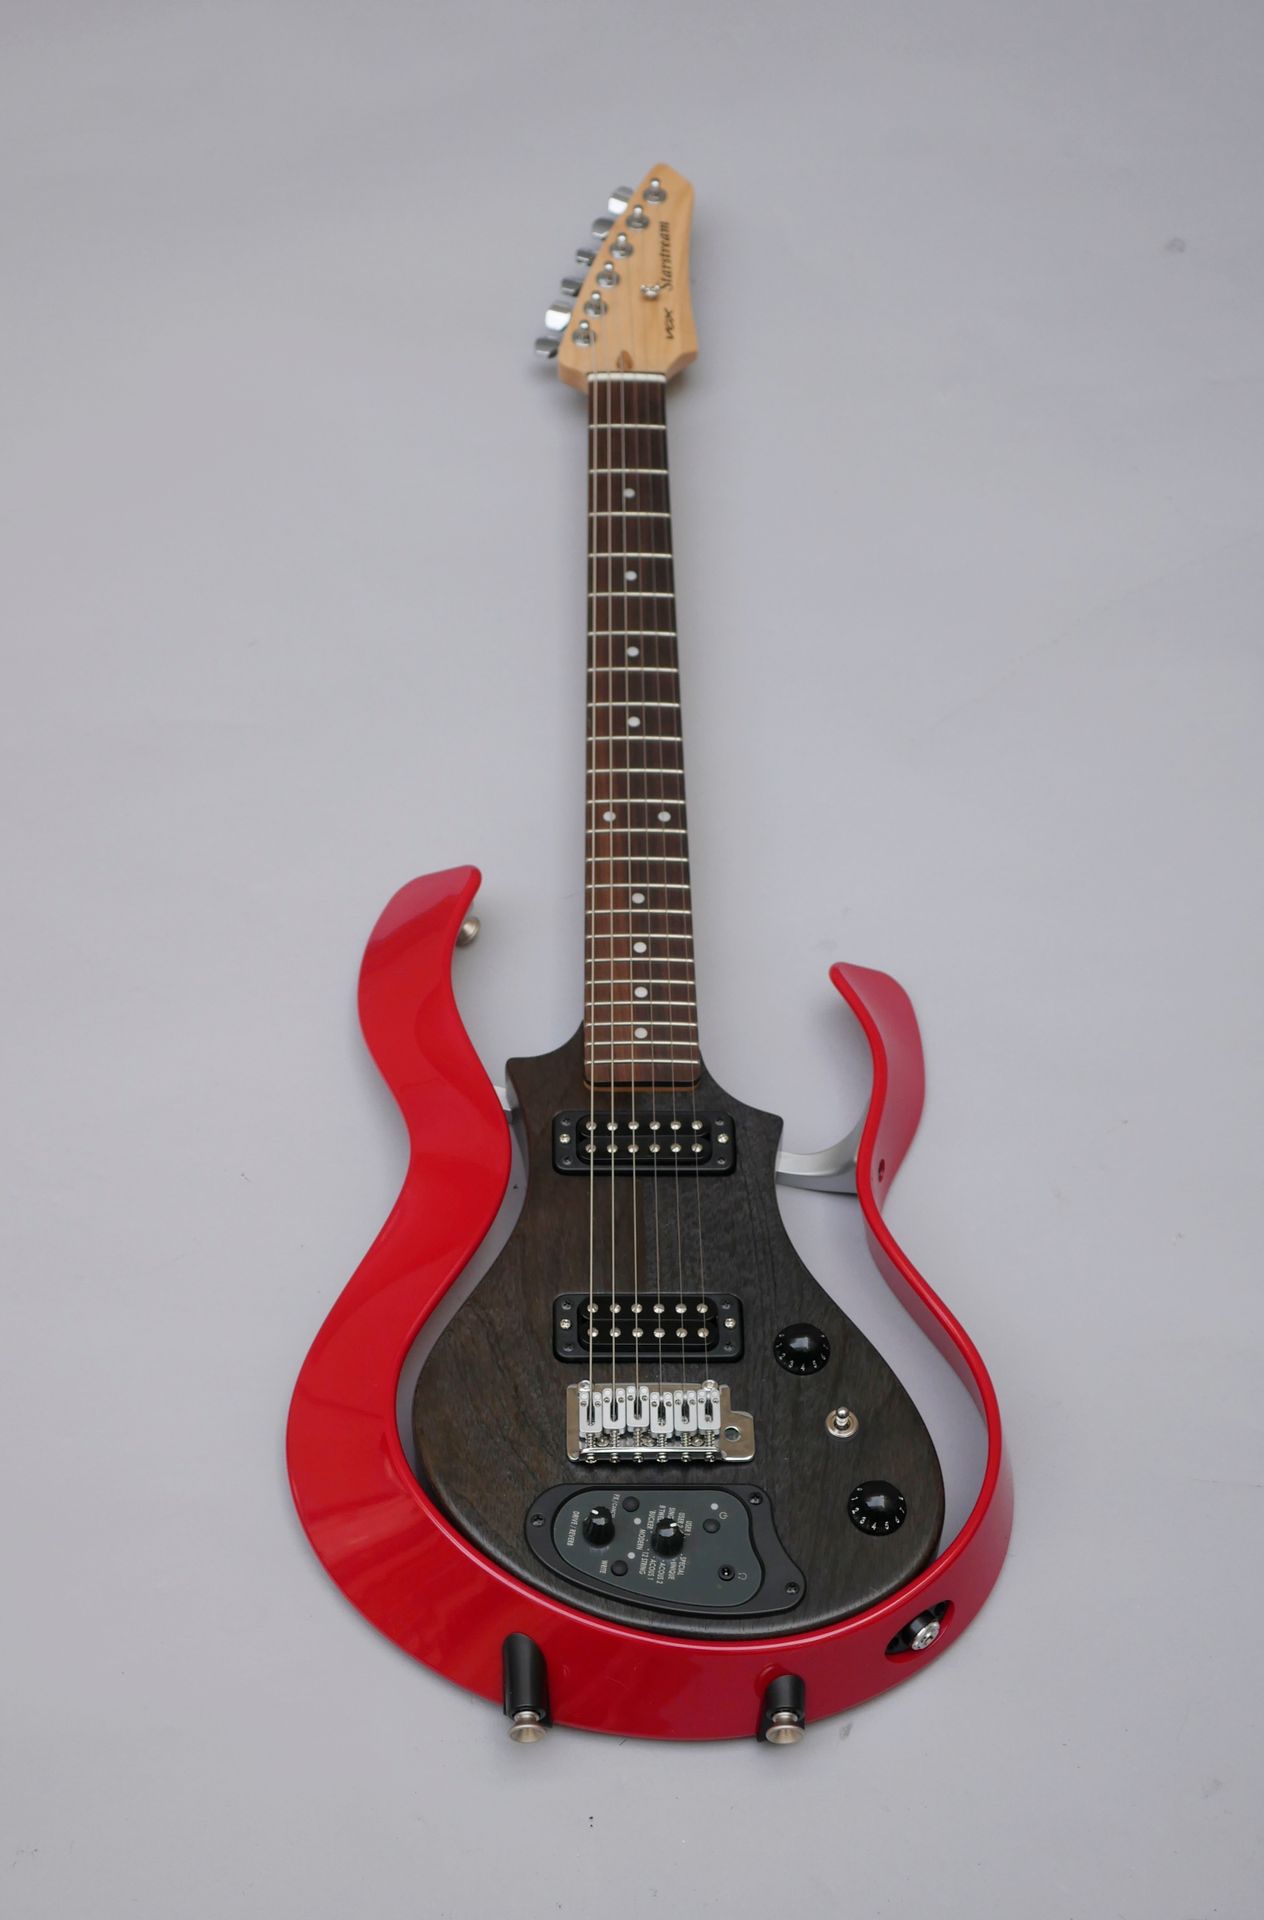 Null 实体电子吉他VOX型号Startream，日本制造。

全新状态，有使用痕迹，原封面。

(电子元件未测试)